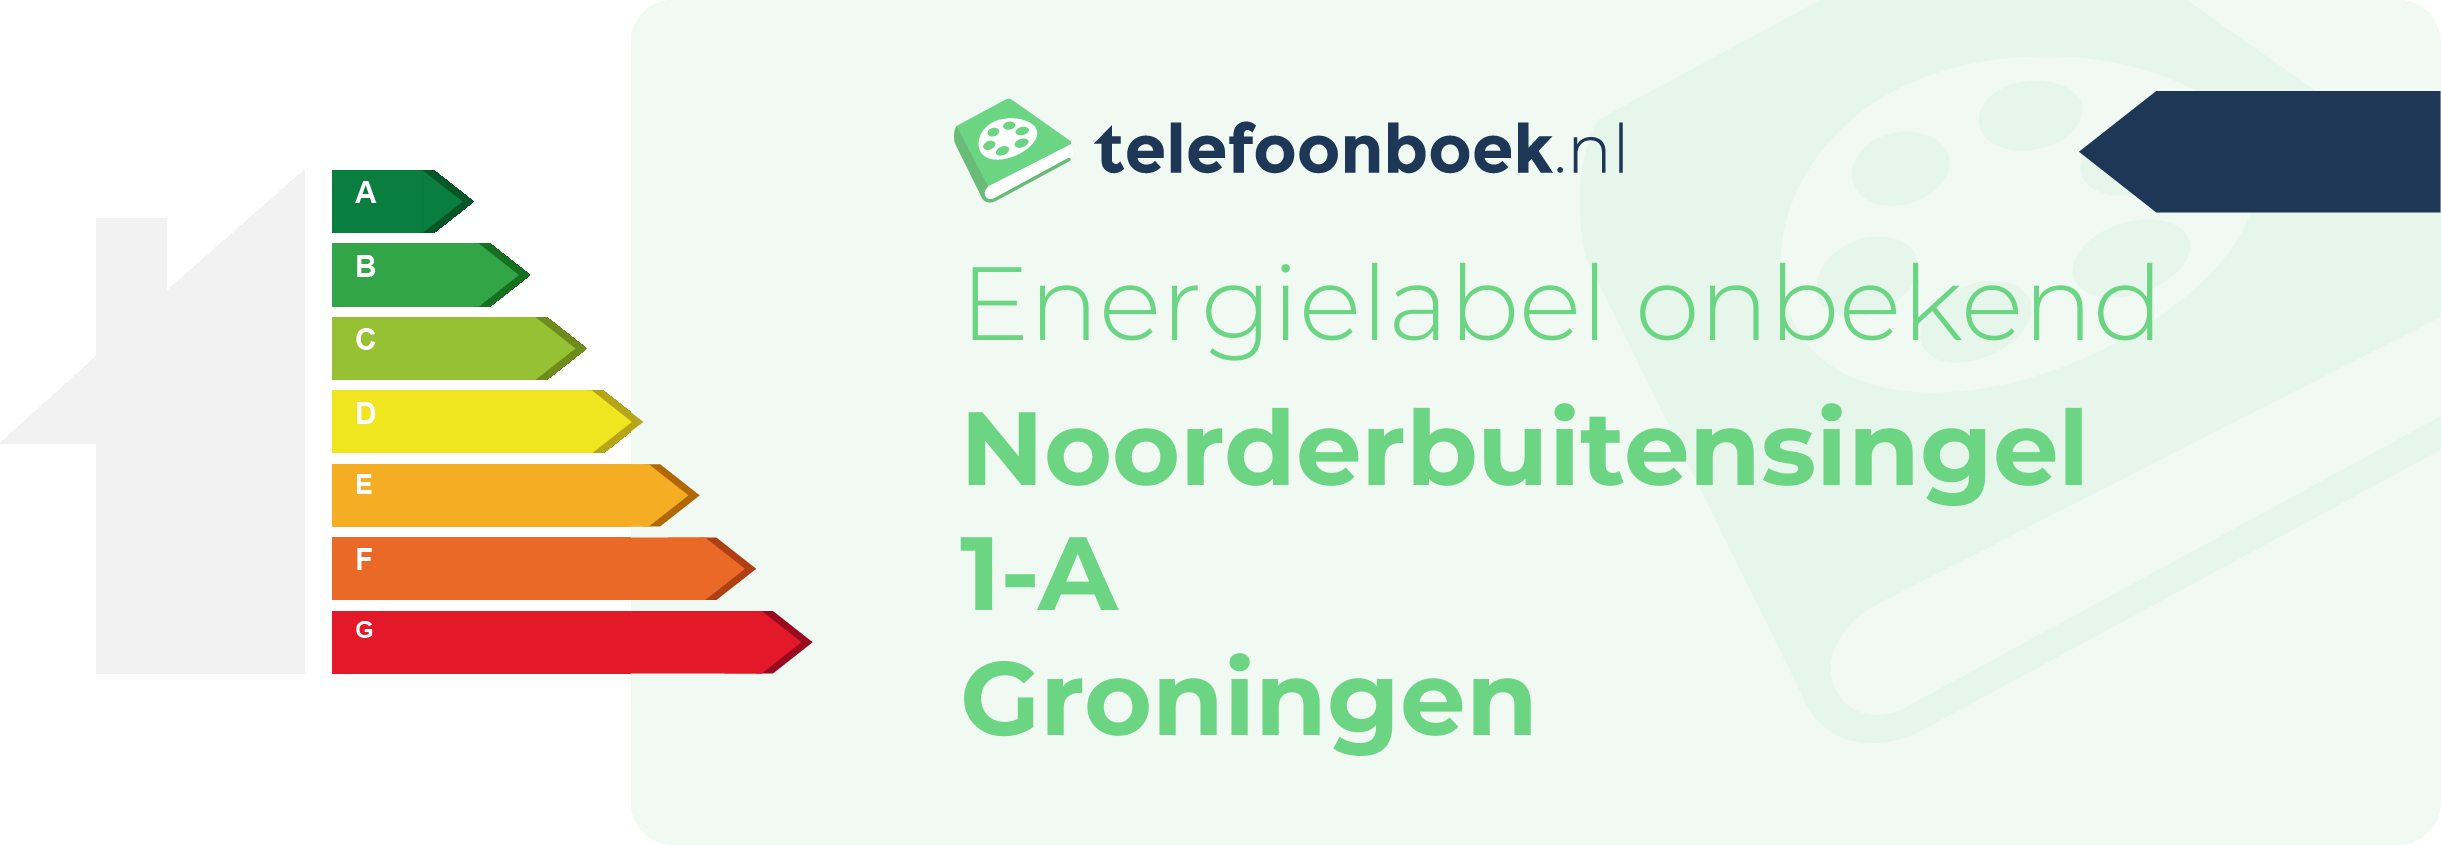 Energielabel Noorderbuitensingel 1-A Groningen